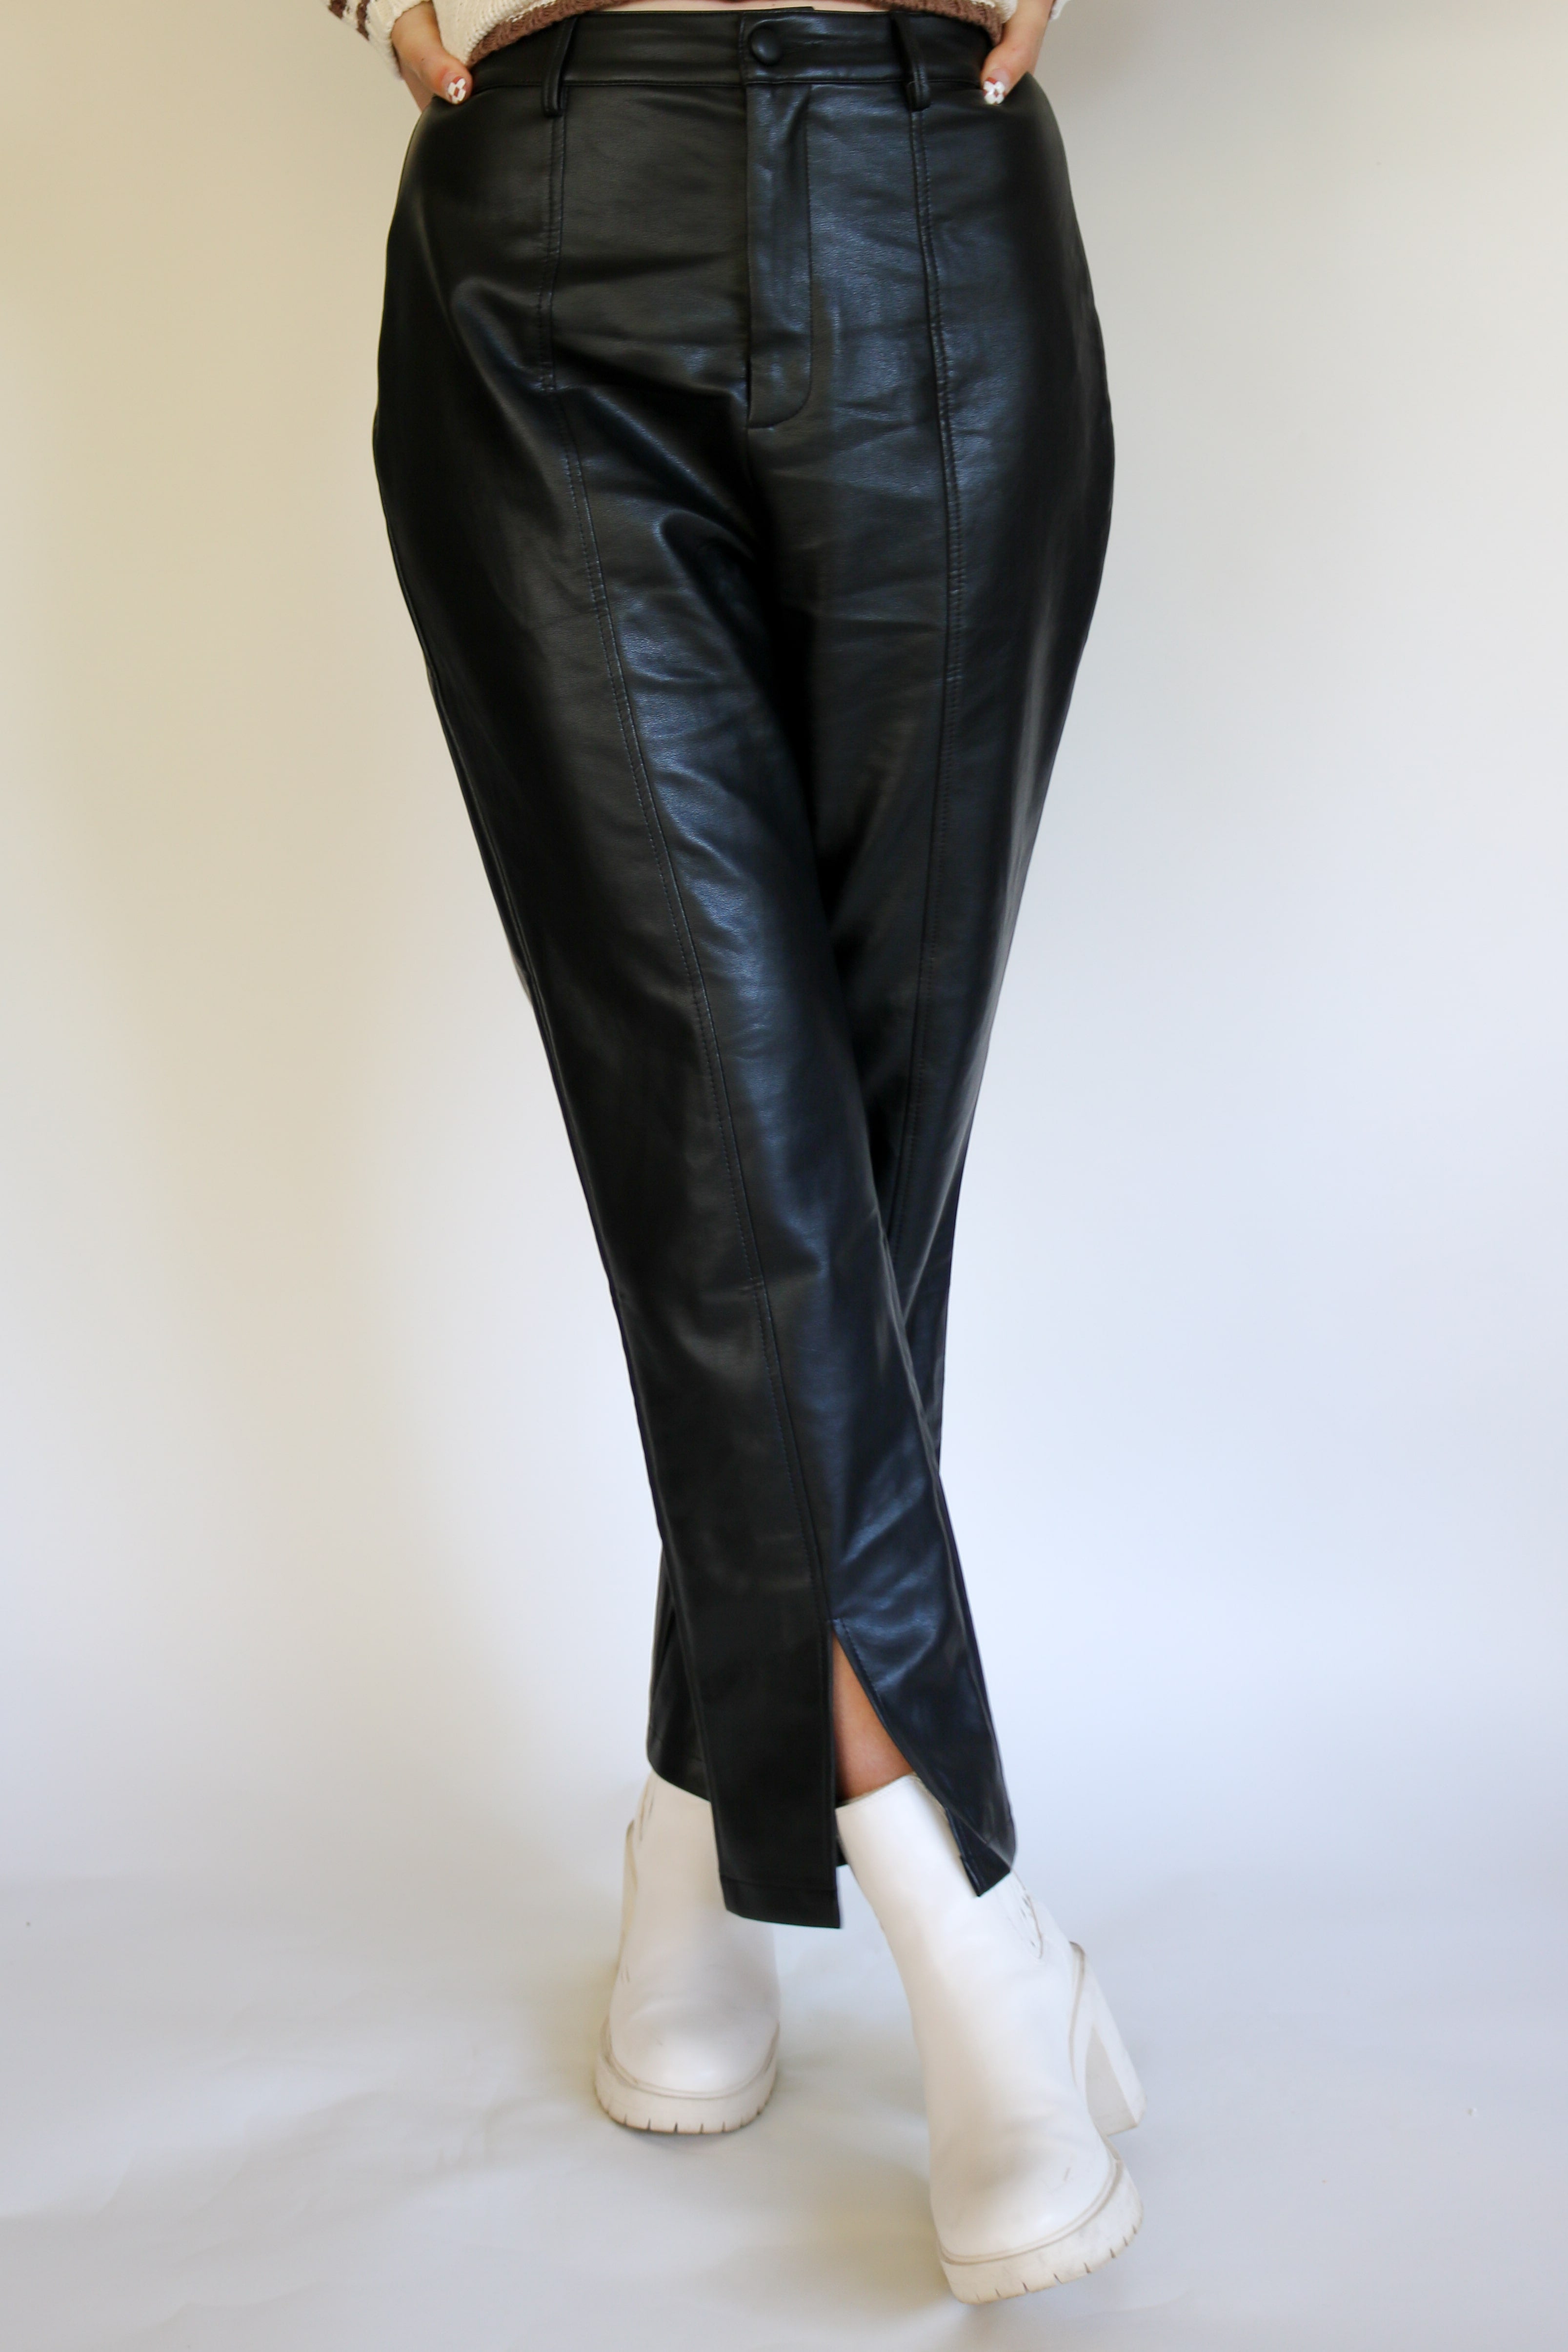 Black Leather Pants*